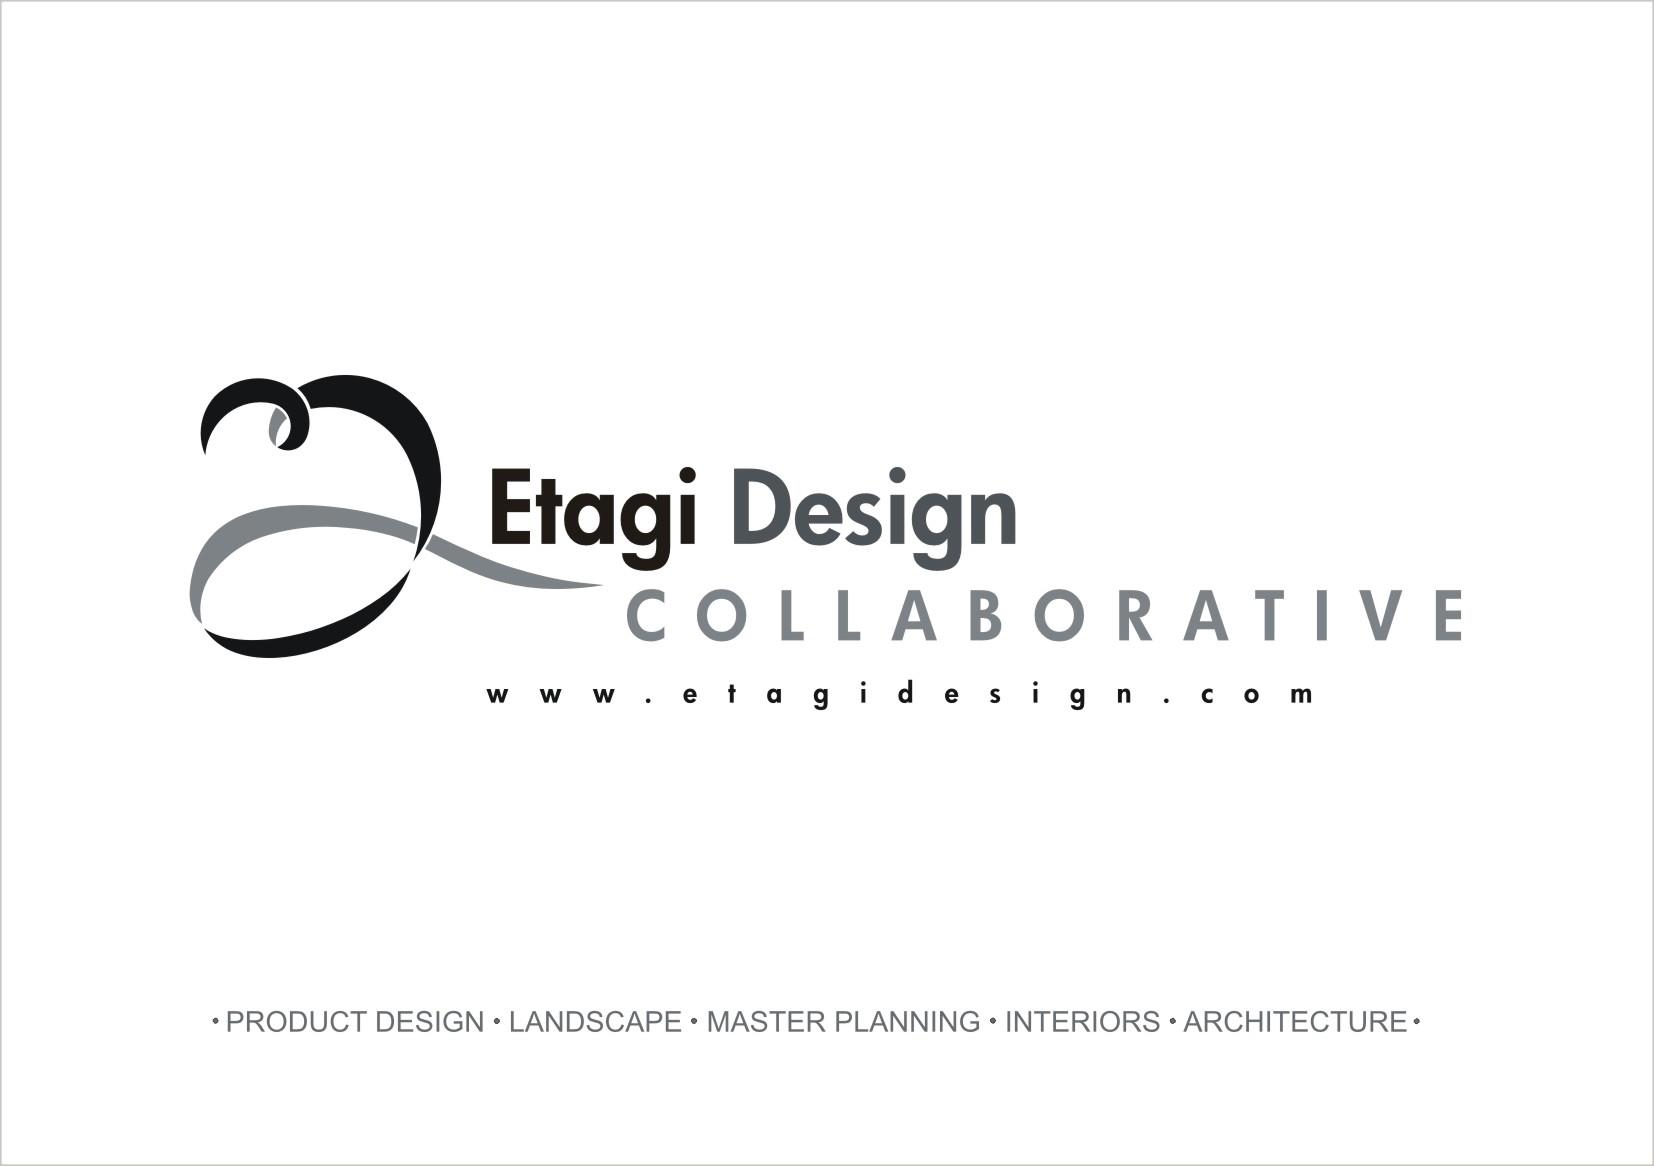 Etagi Design Collaborative|Legal Services|Professional Services